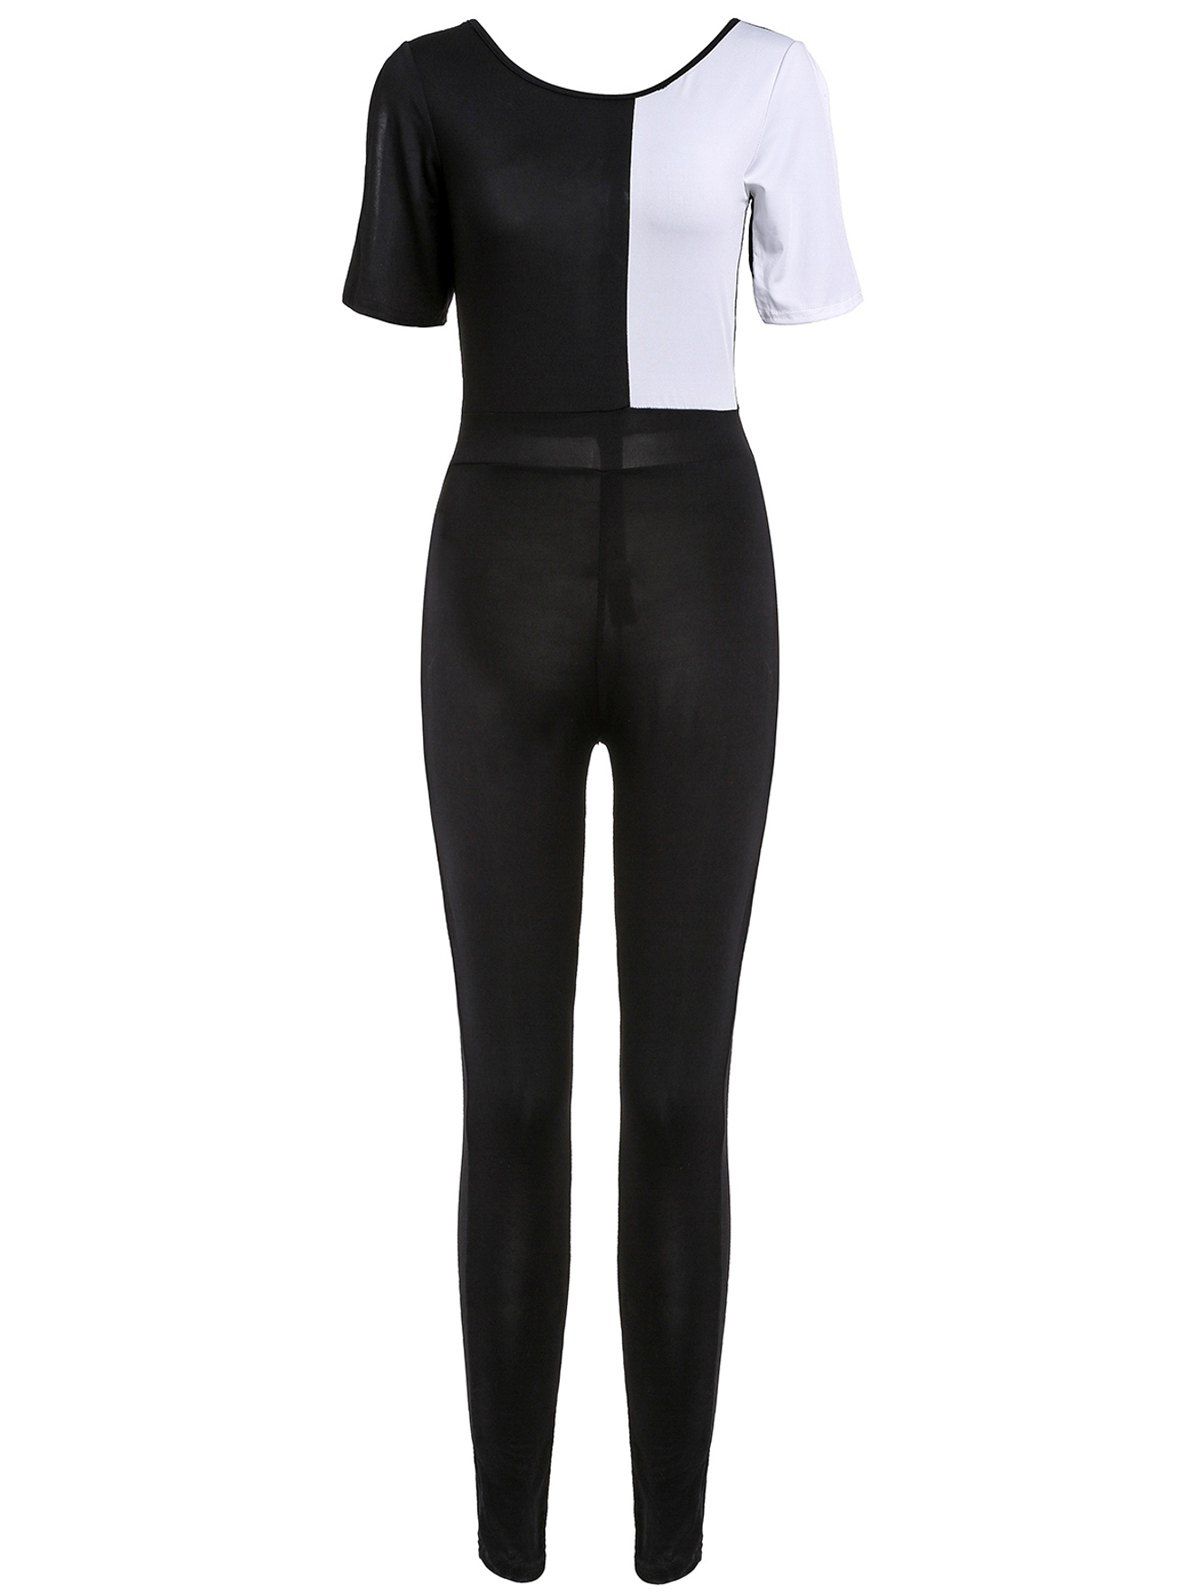 [66% OFF] Chic Jewel Neck Color Block Short Sleeve Jumpsuit For Women ...